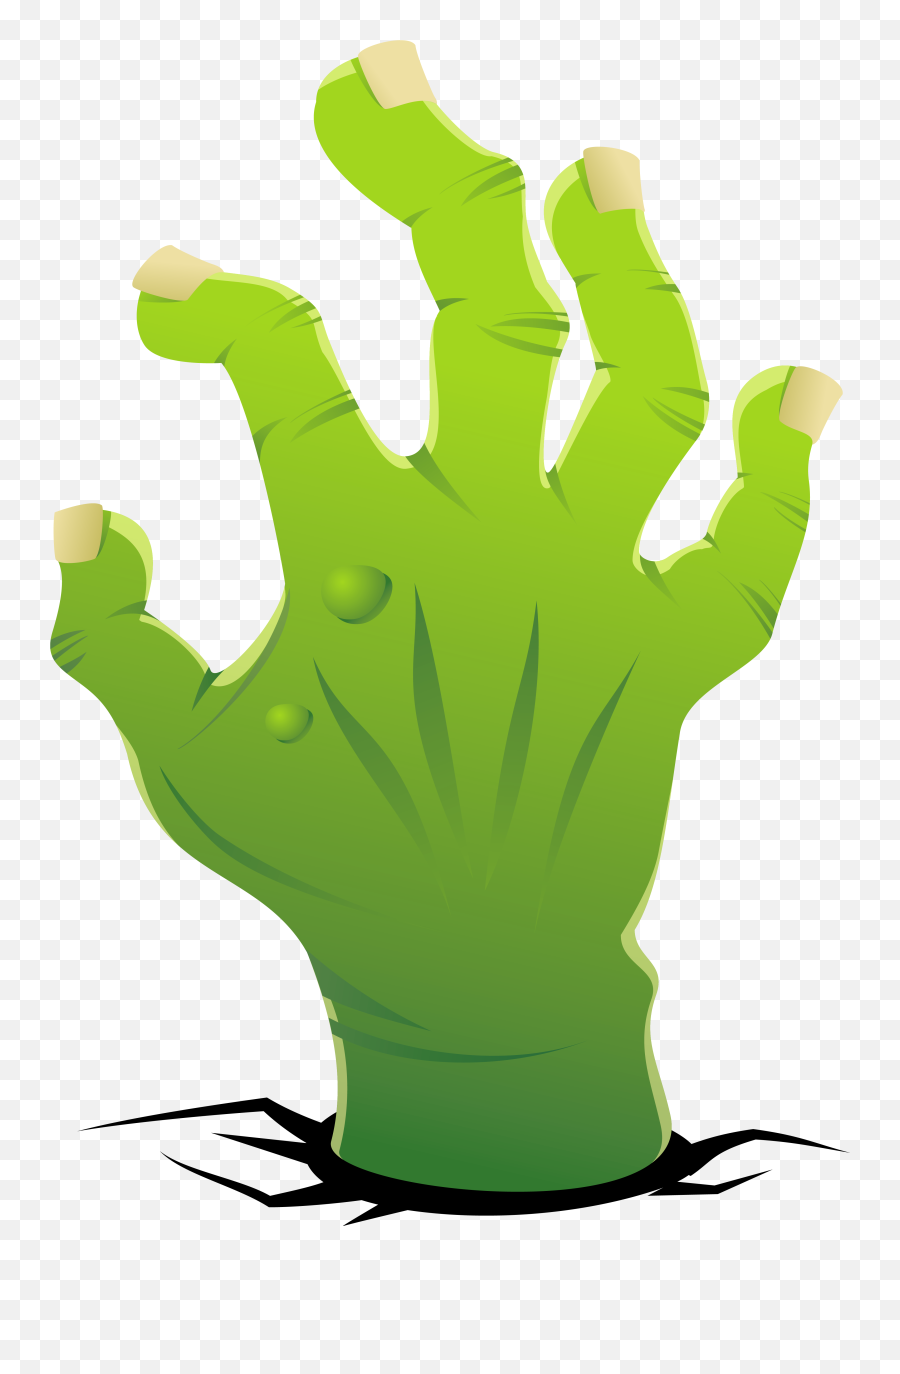 Zombie Hand Clipart Image - Transparent Background Zombie Hand Clipart Emoji,Hand Clipart